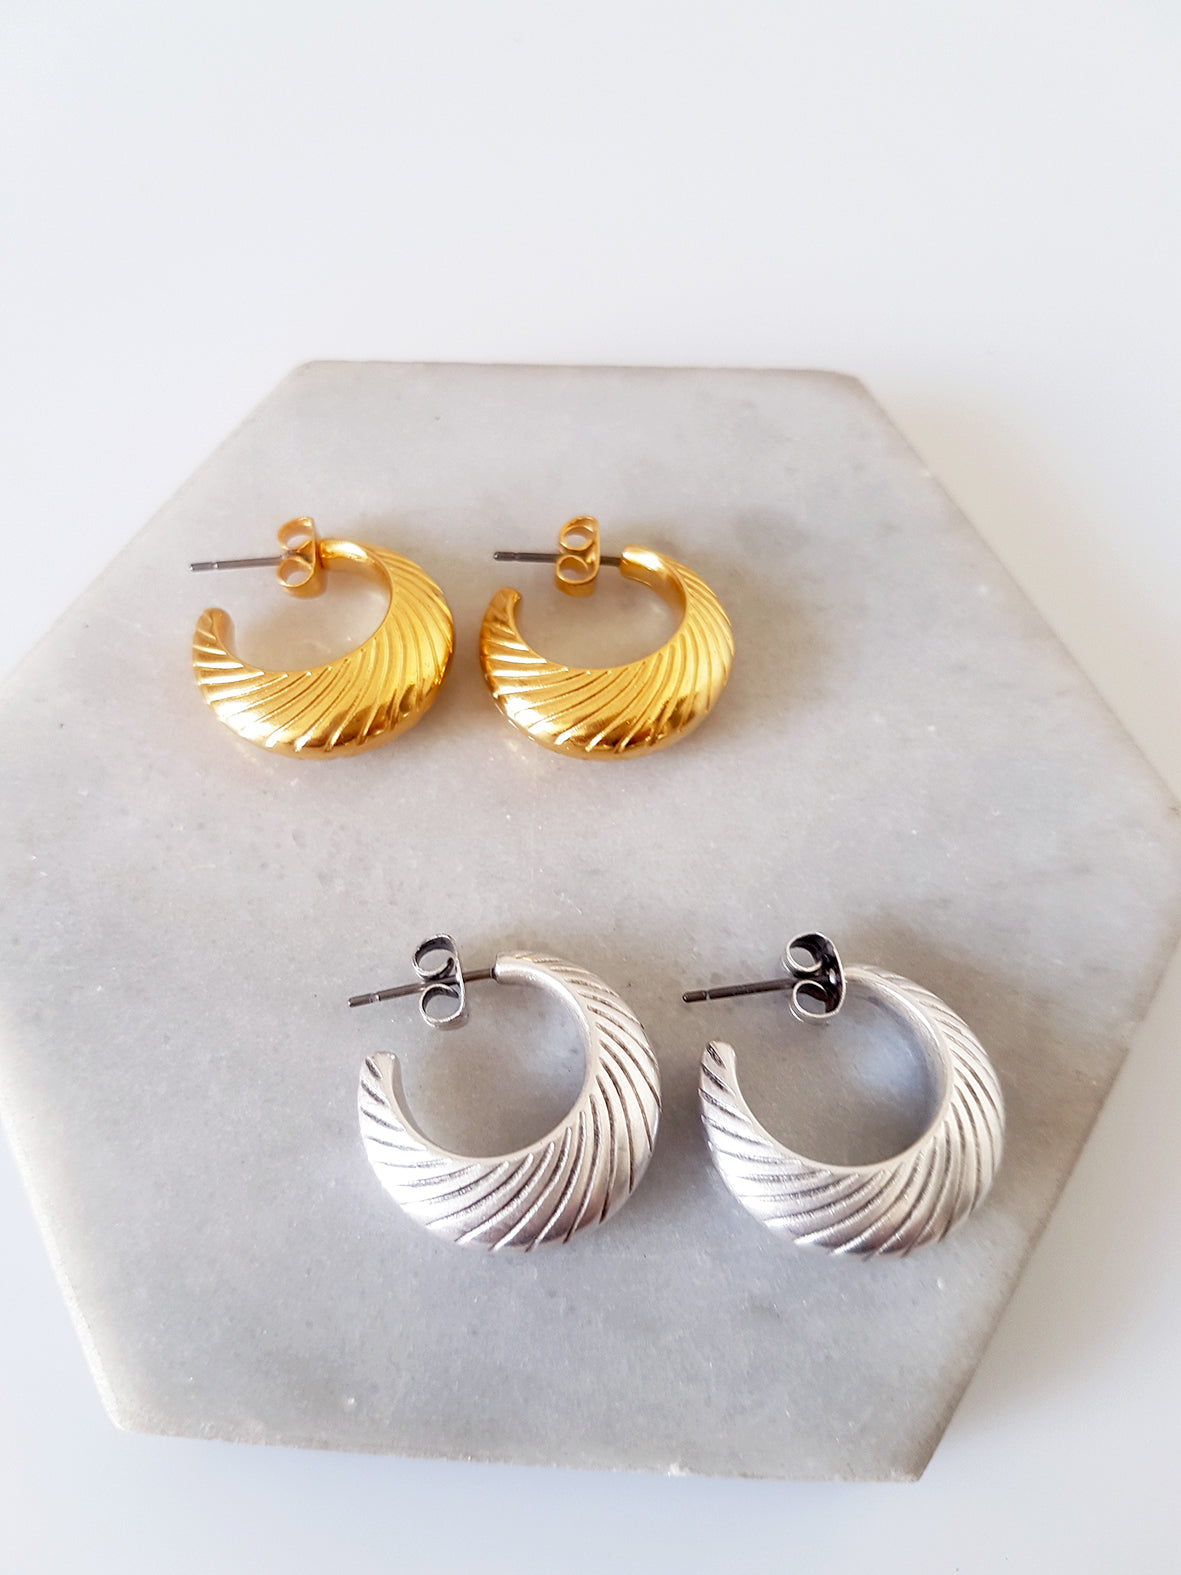 Hoop earrings with line pattern, pack of 2 sets (4pcs)